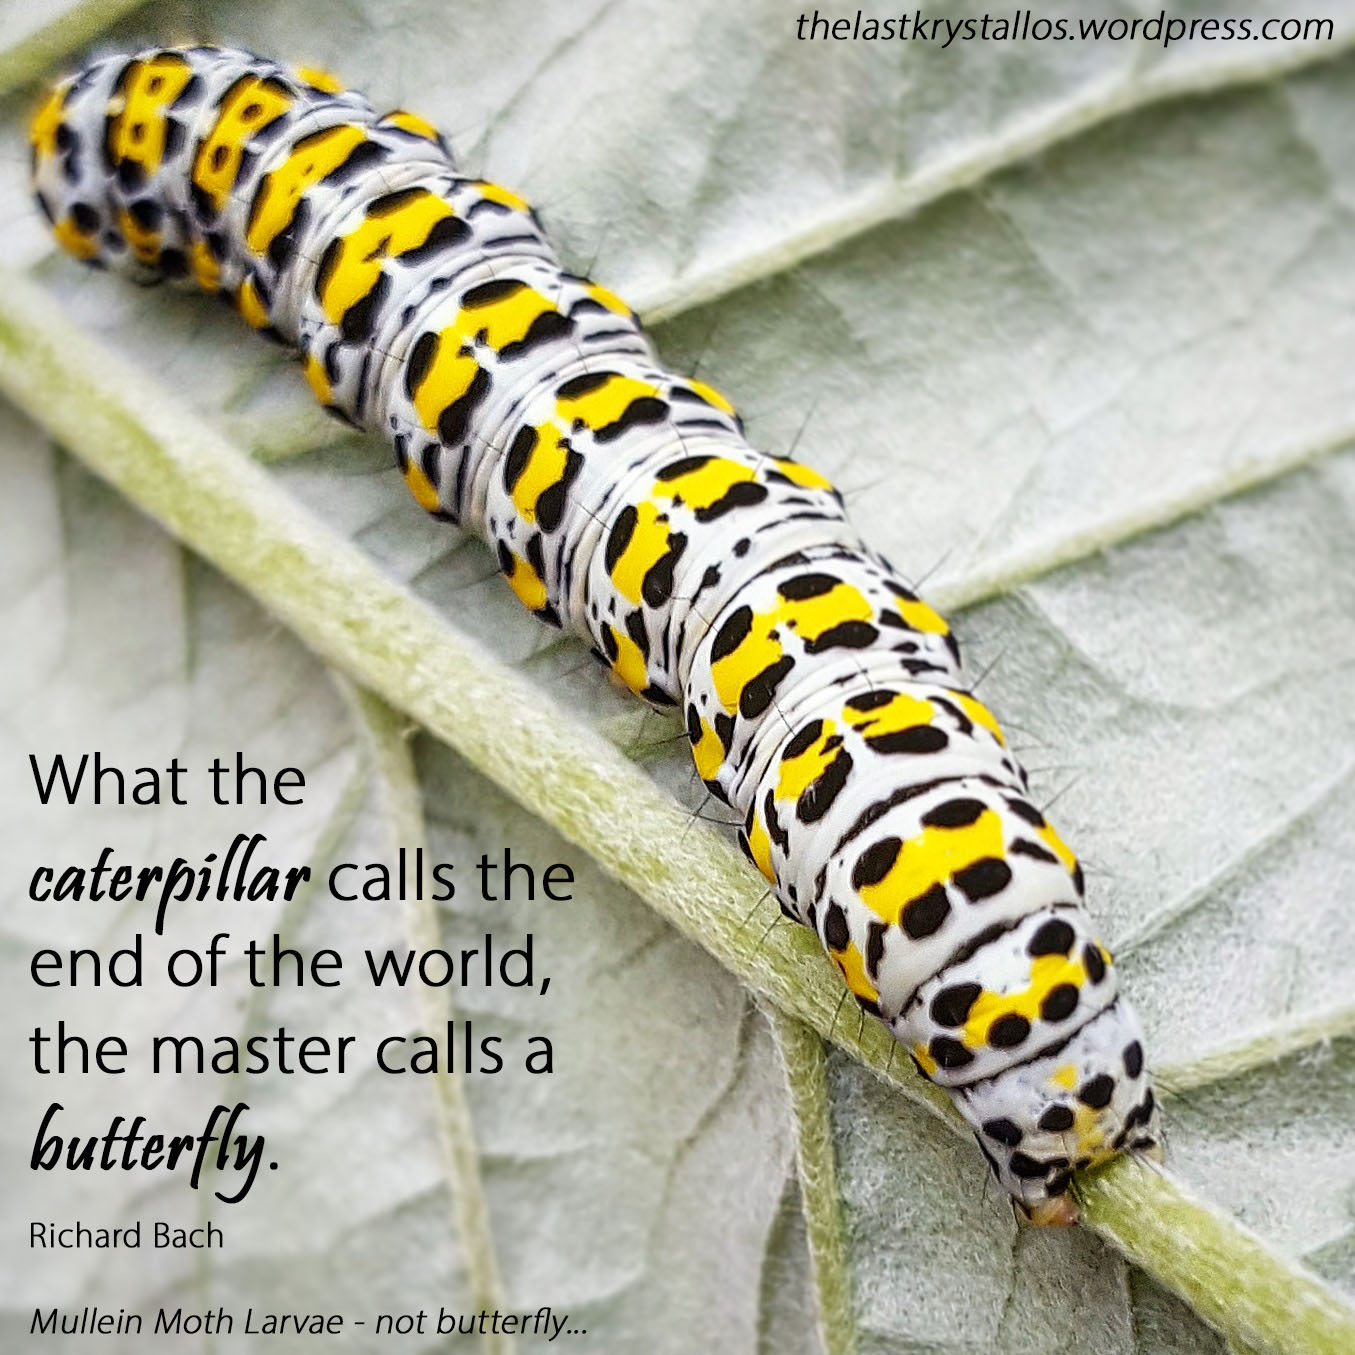 Mullein-Moth-Larvae-Caterpillar -The-Last-Krystallos - caterpillar end of the world a butterfly-Richard Bach